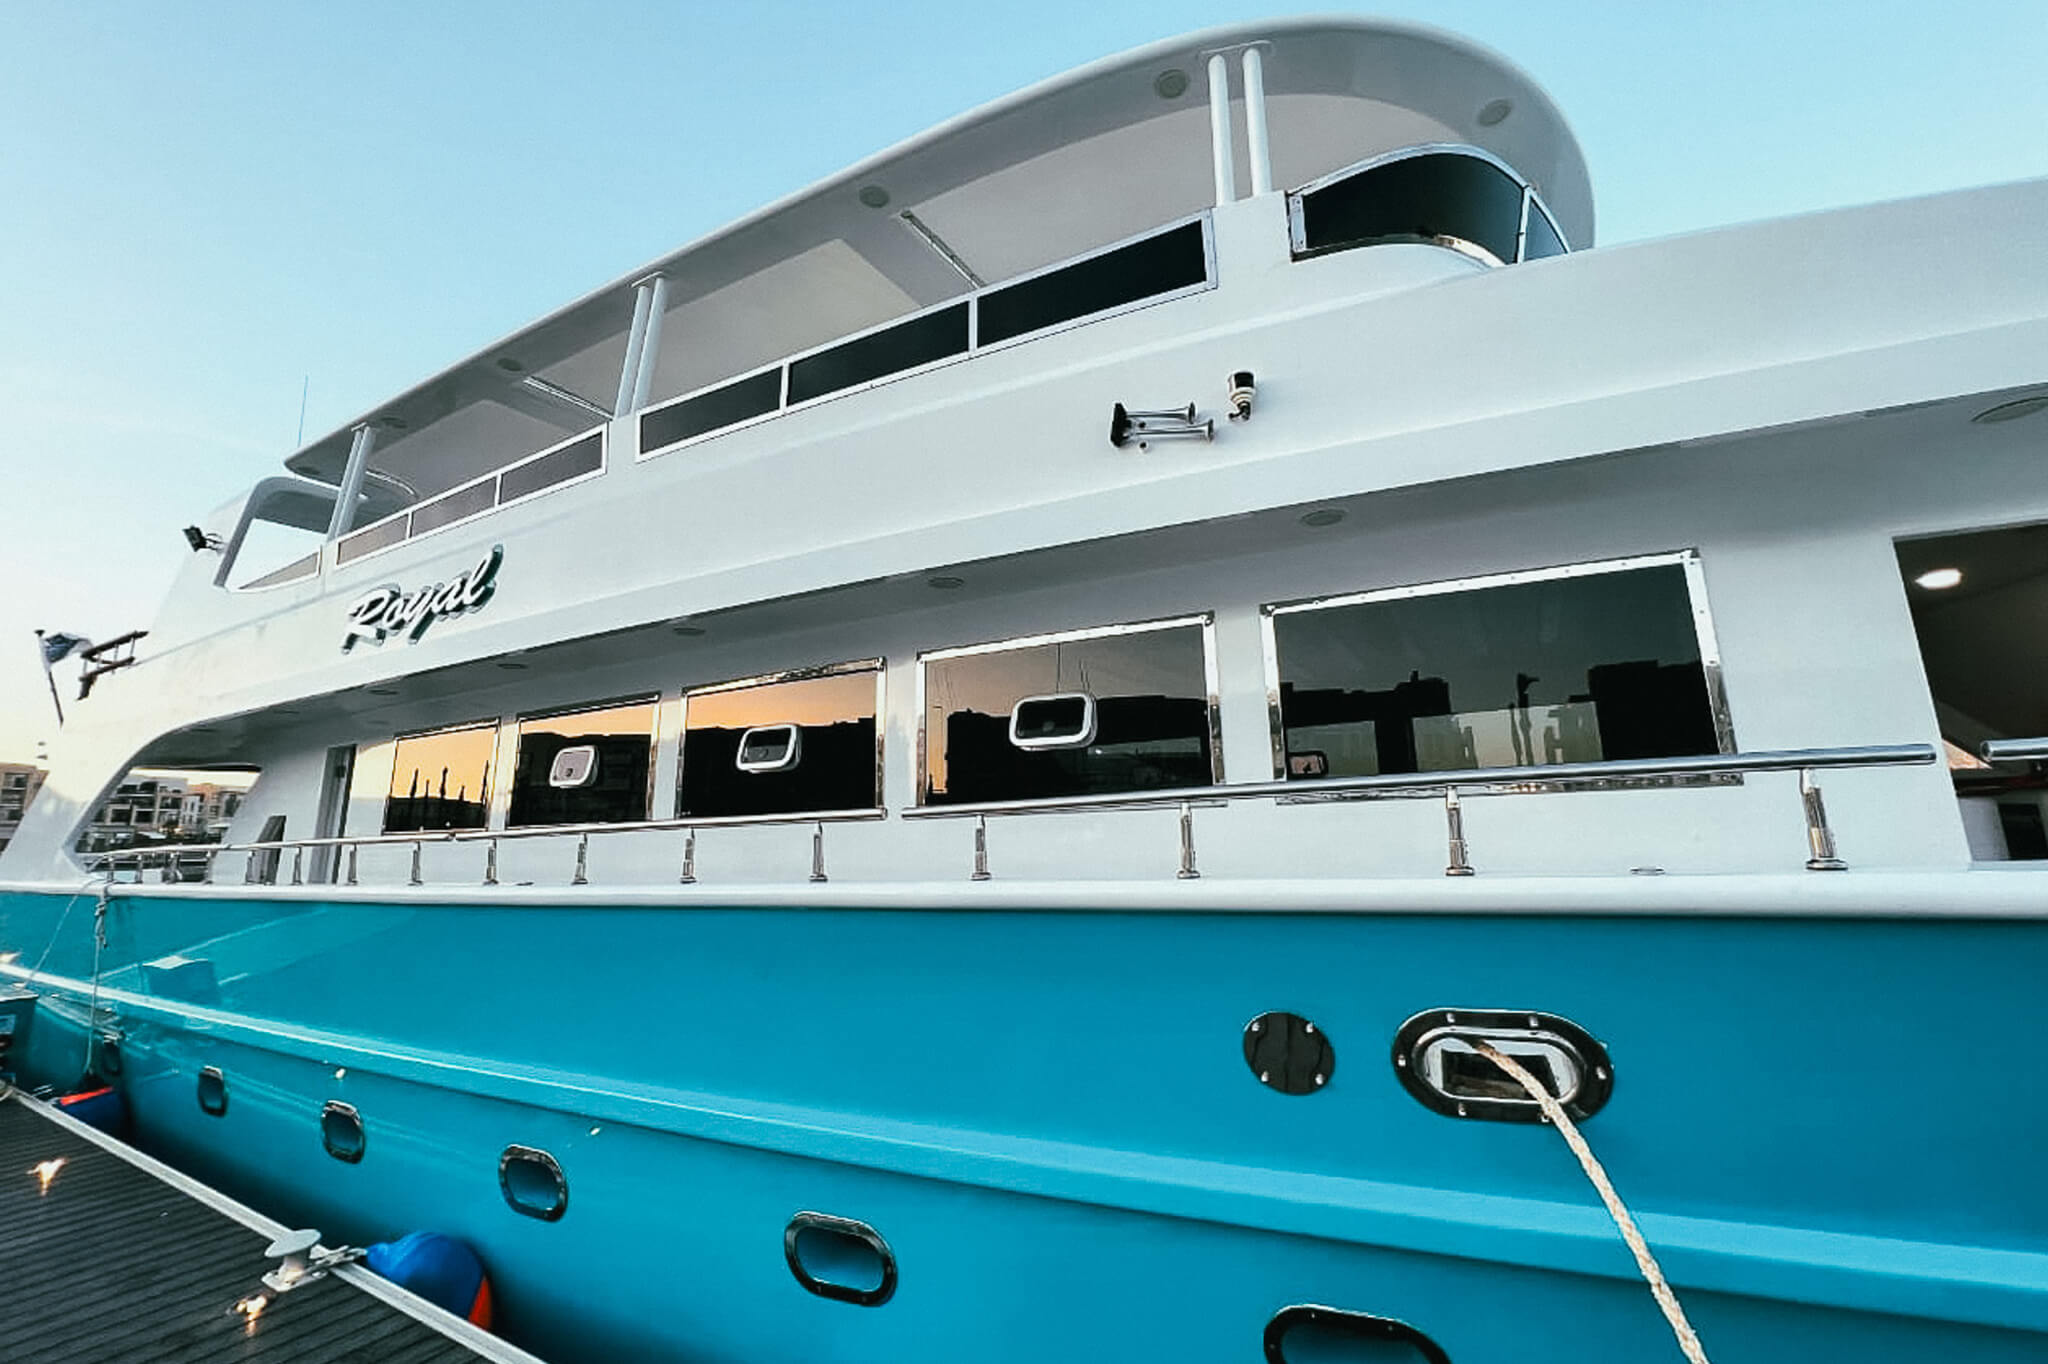 Royal cruise boat hurghada -luxury snorkeling trip 3